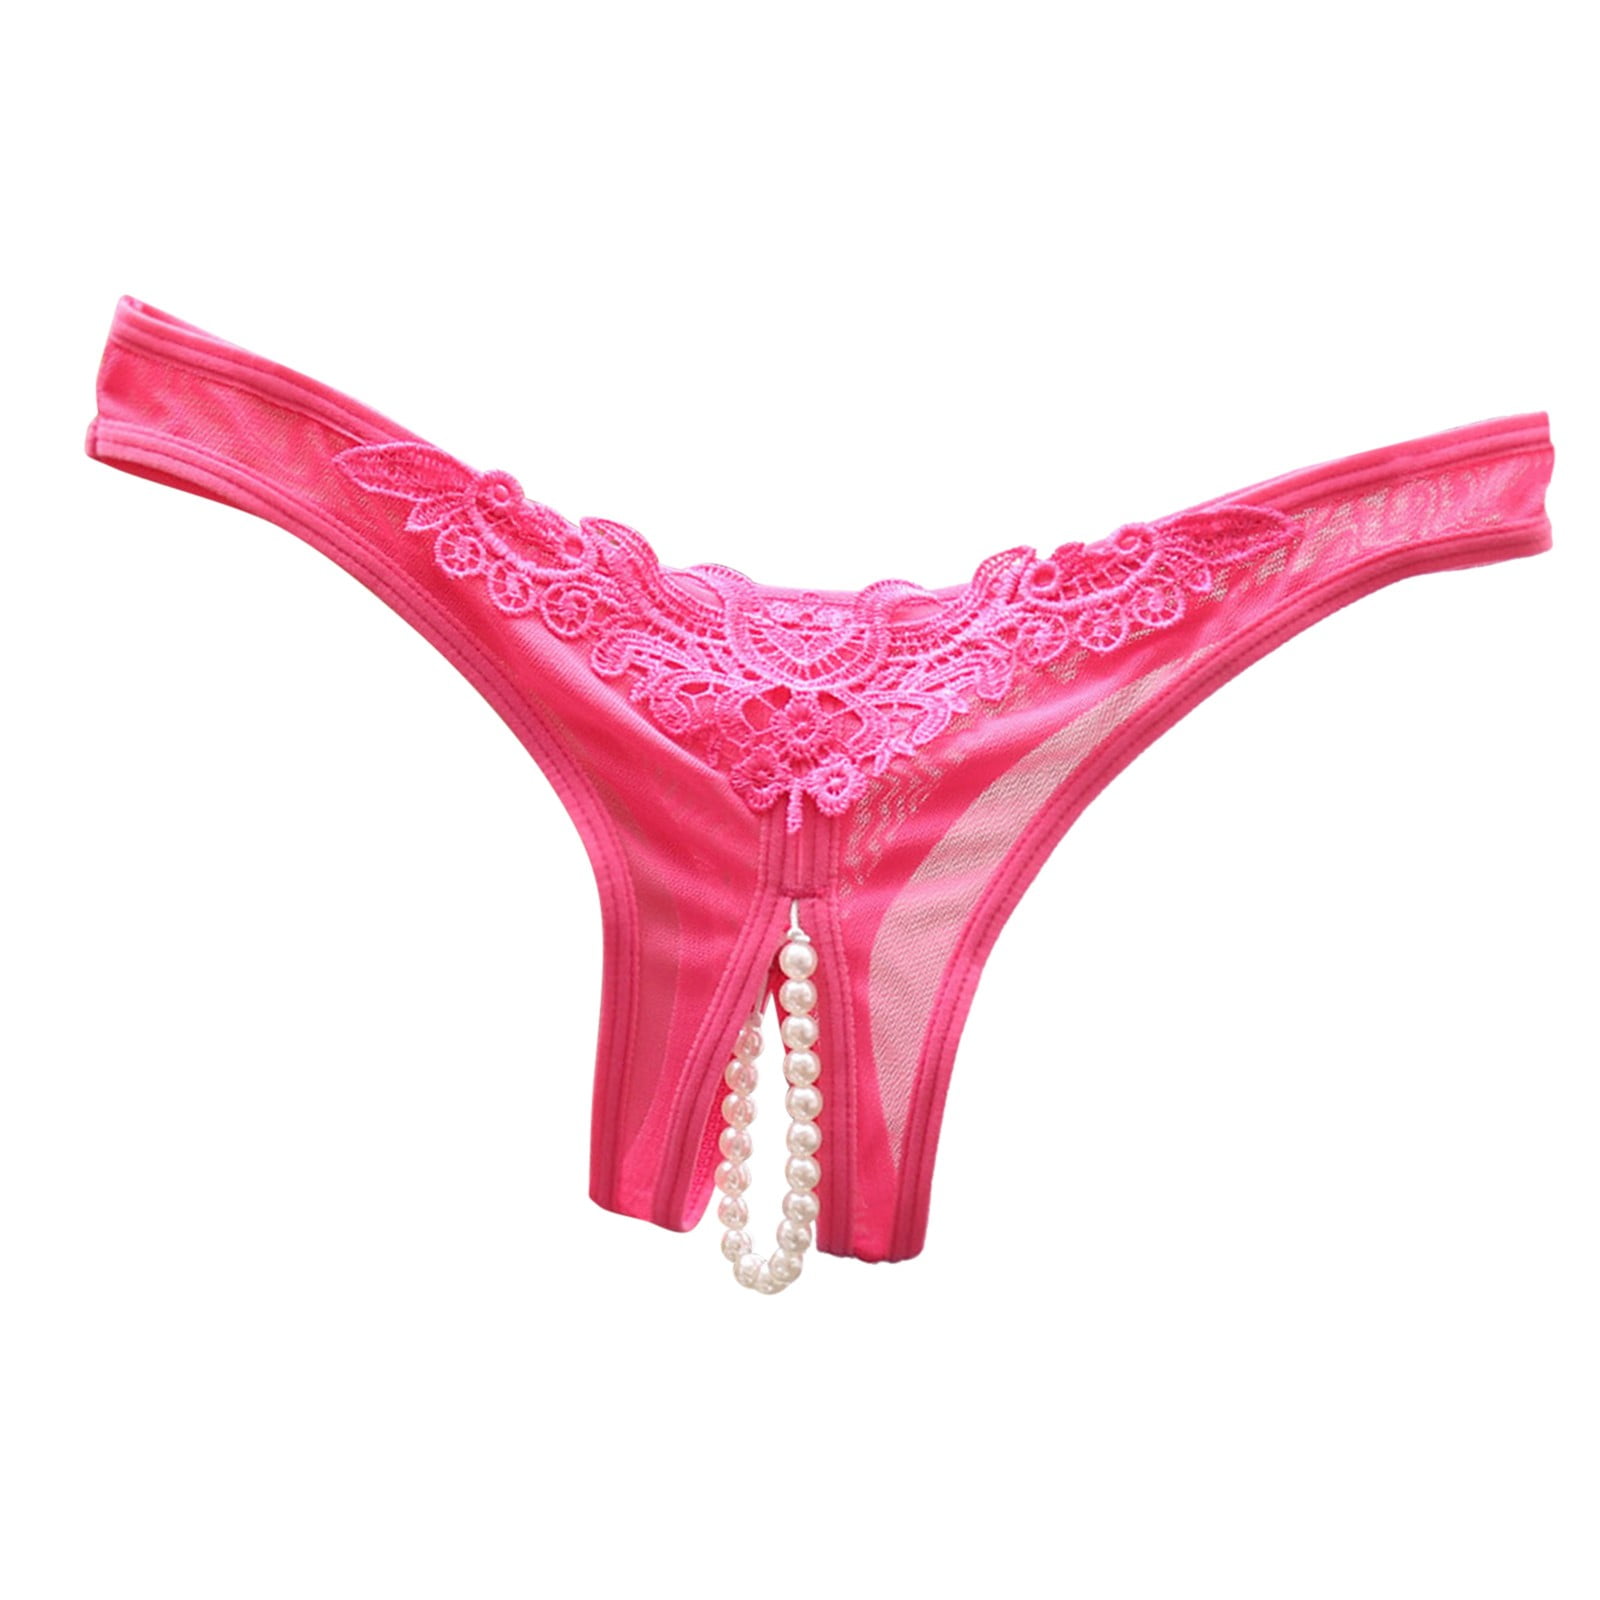 CBGELRT Underwear Women Transparent Women's Panties Cute Bow Pearl Briefs  Female Lace Underwear Thongs Lingerie Panty Hot Pink One Size